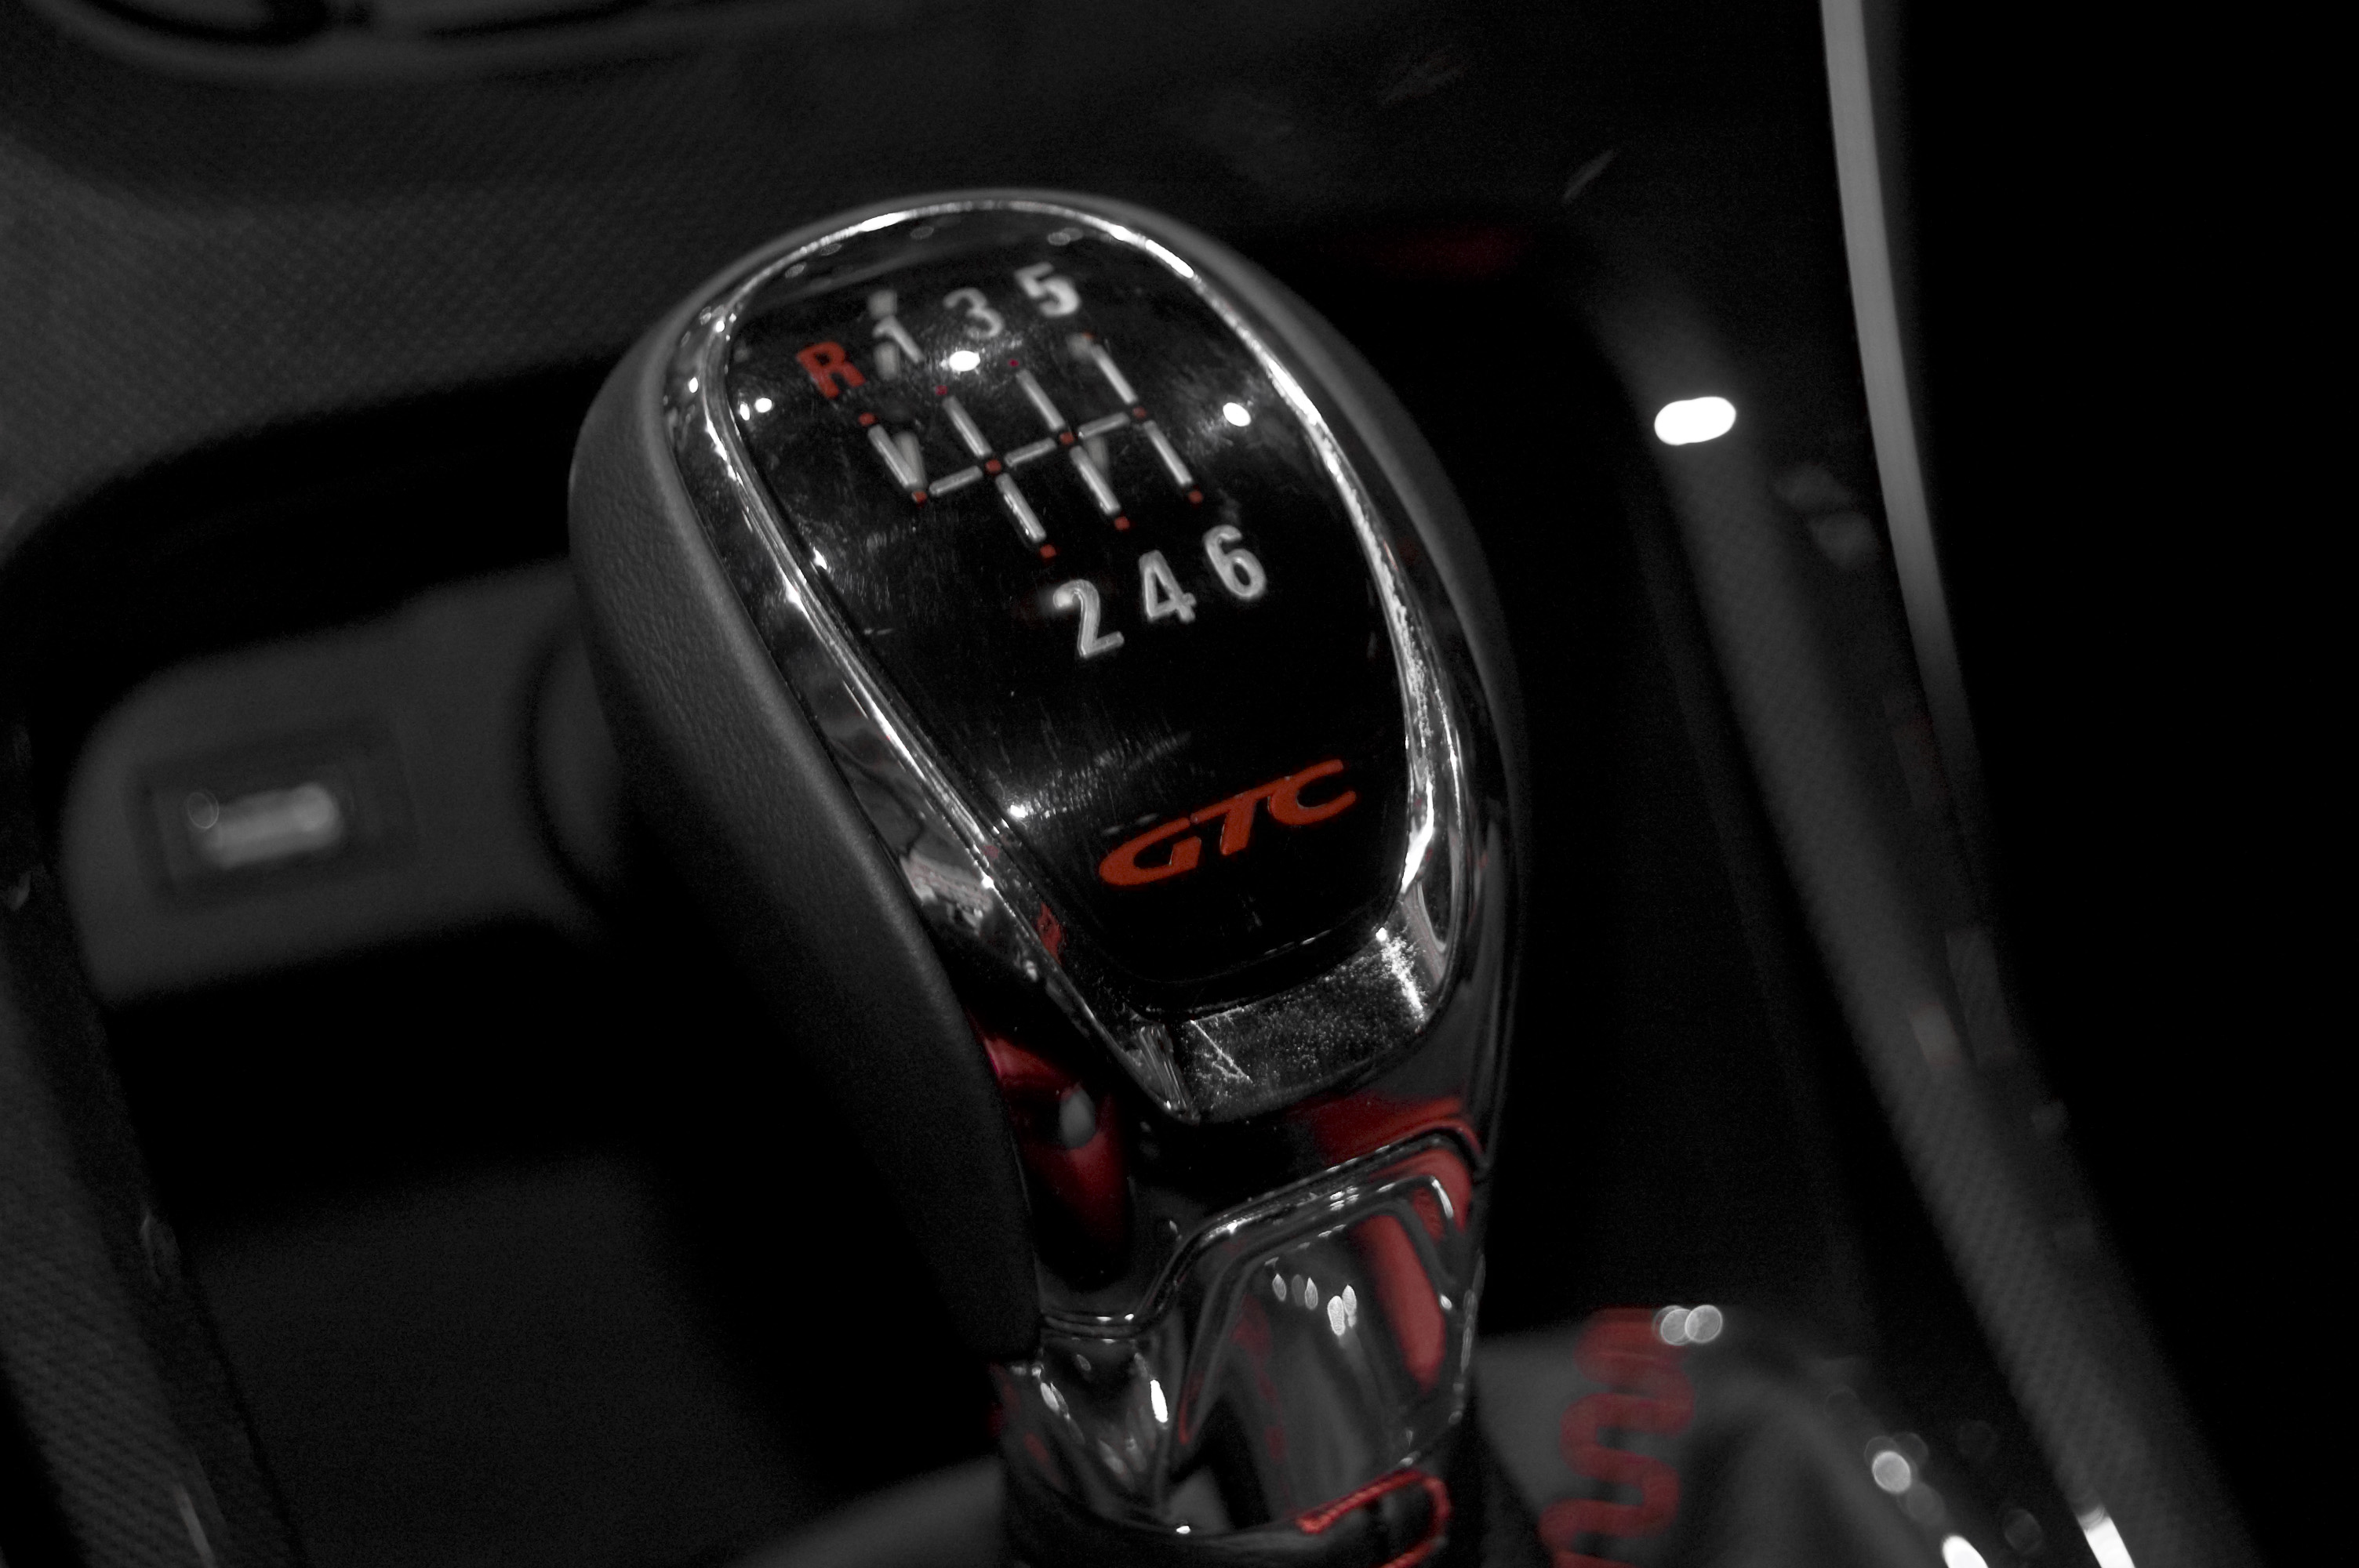 Opel Astra GTC Paris Concept | Flickr - Photo Sharing!